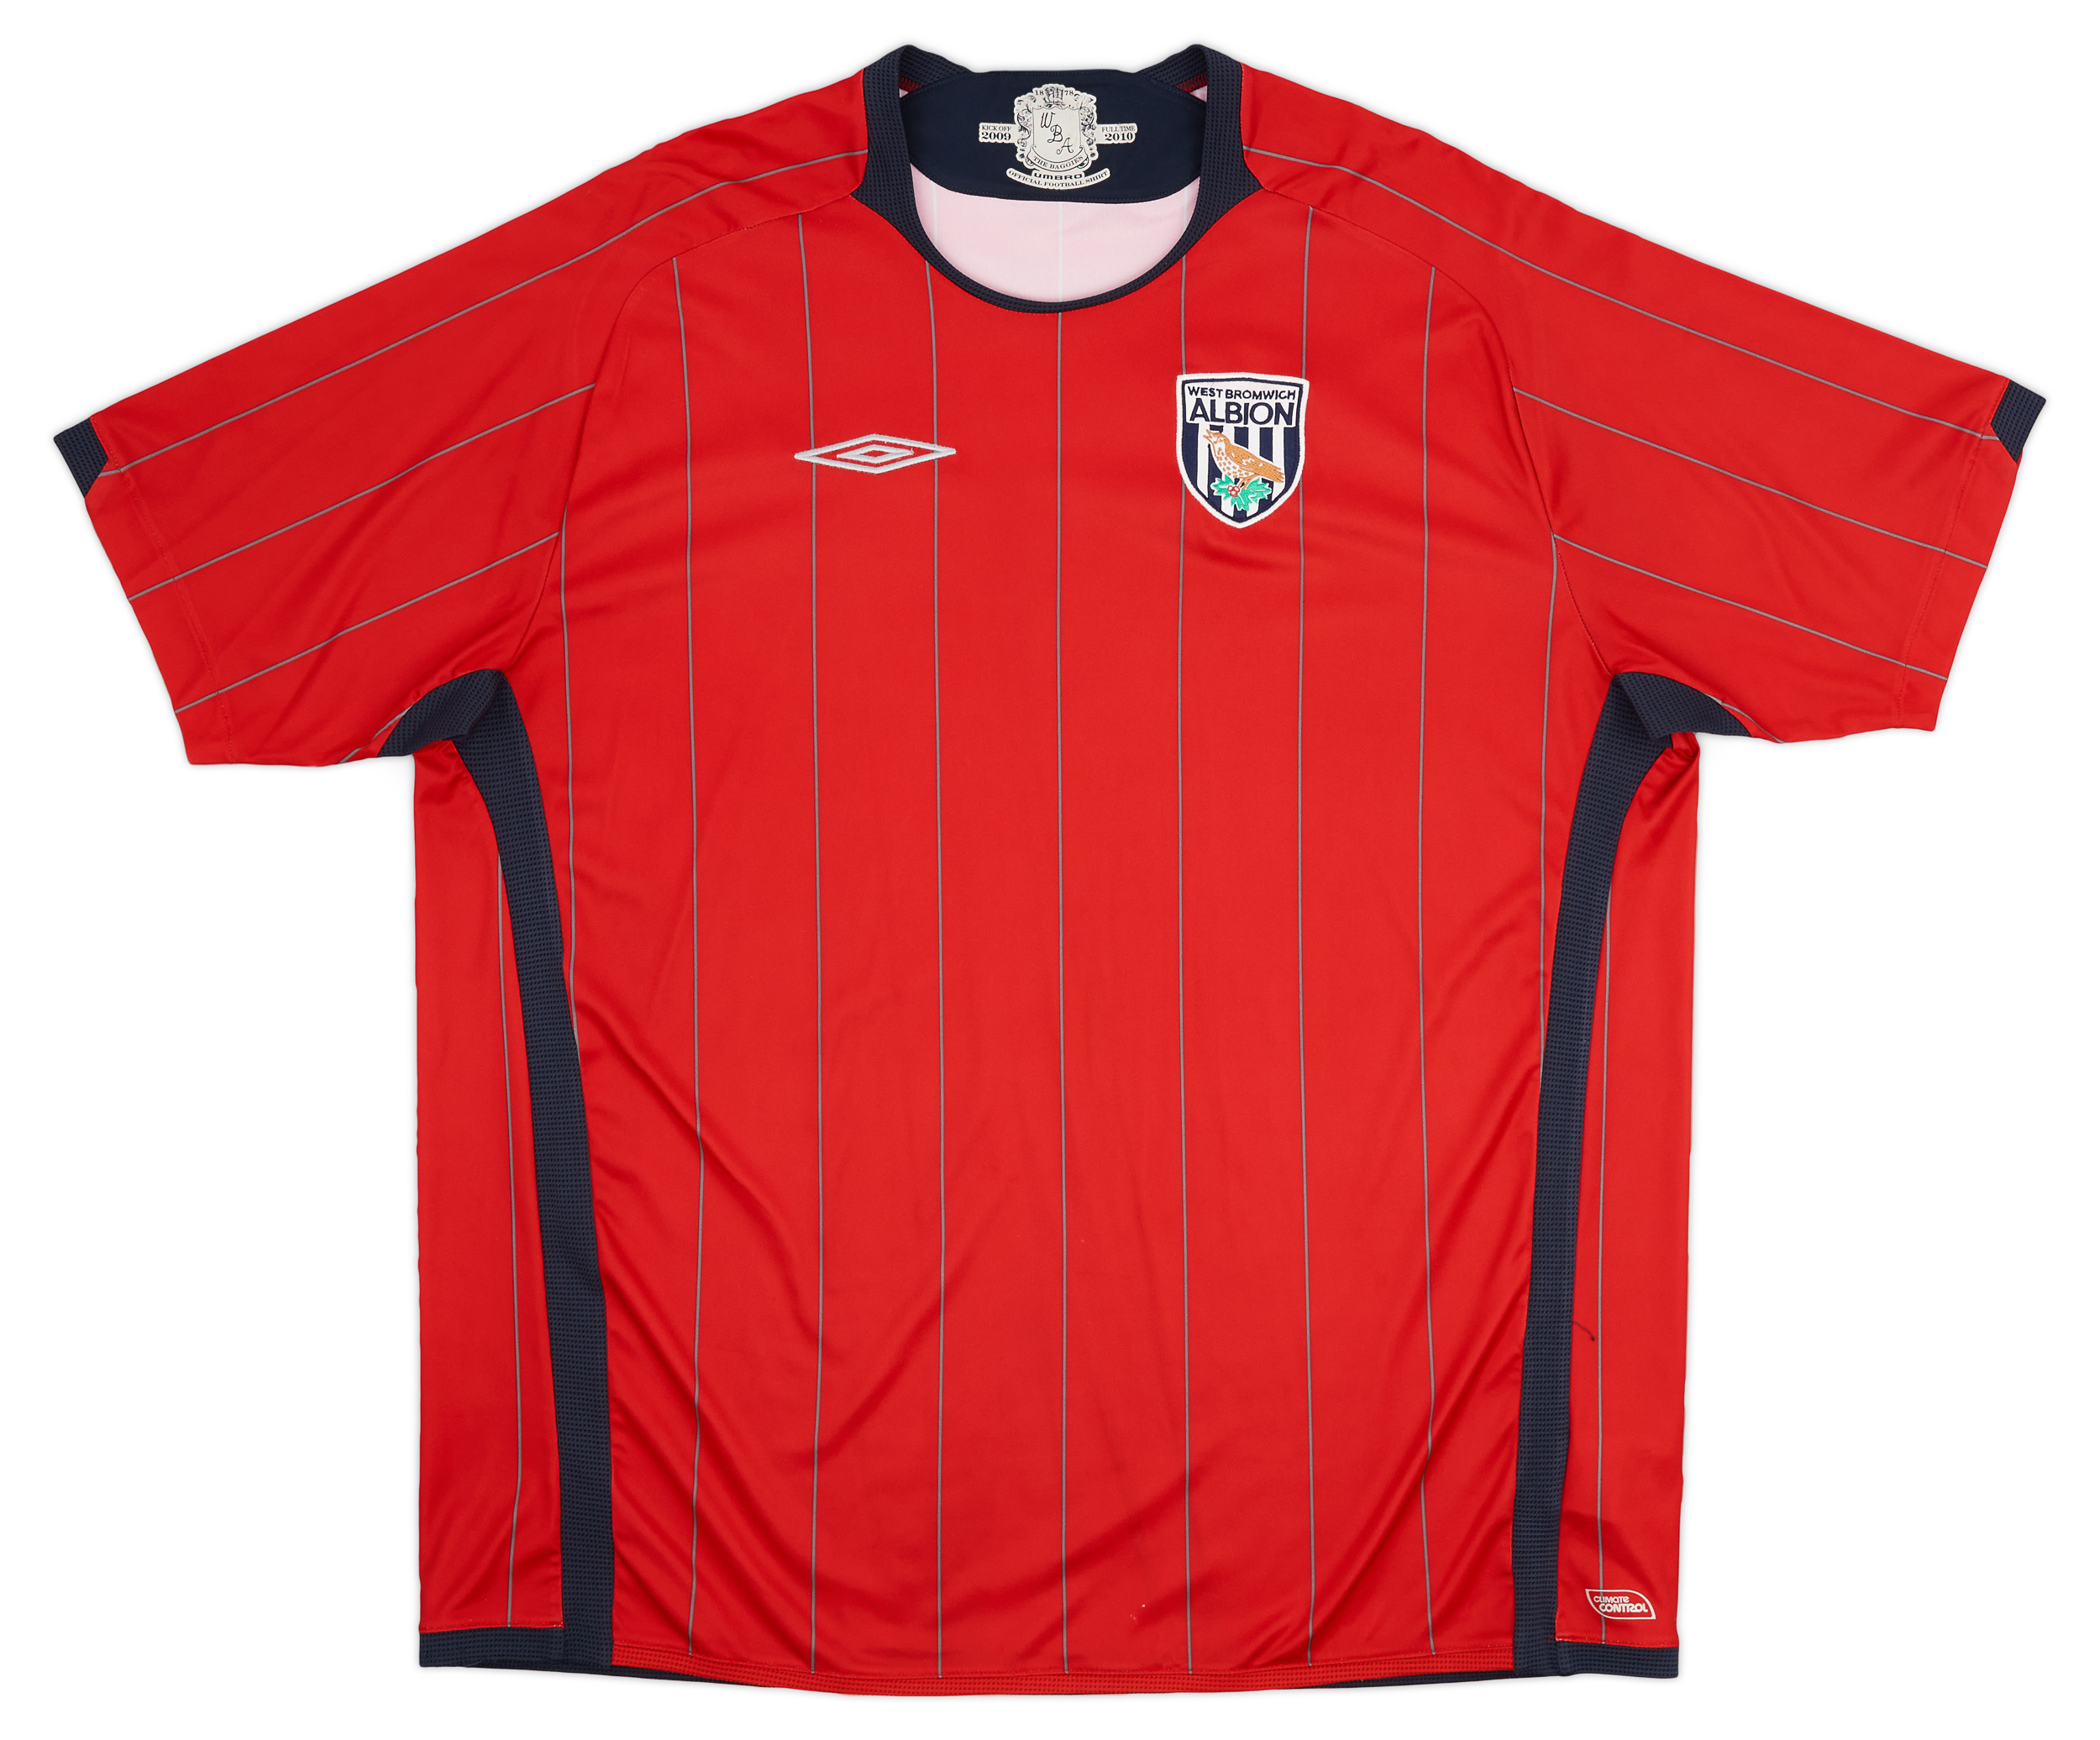 2009-10 West Brom Away Shirt - 8/10 - ()